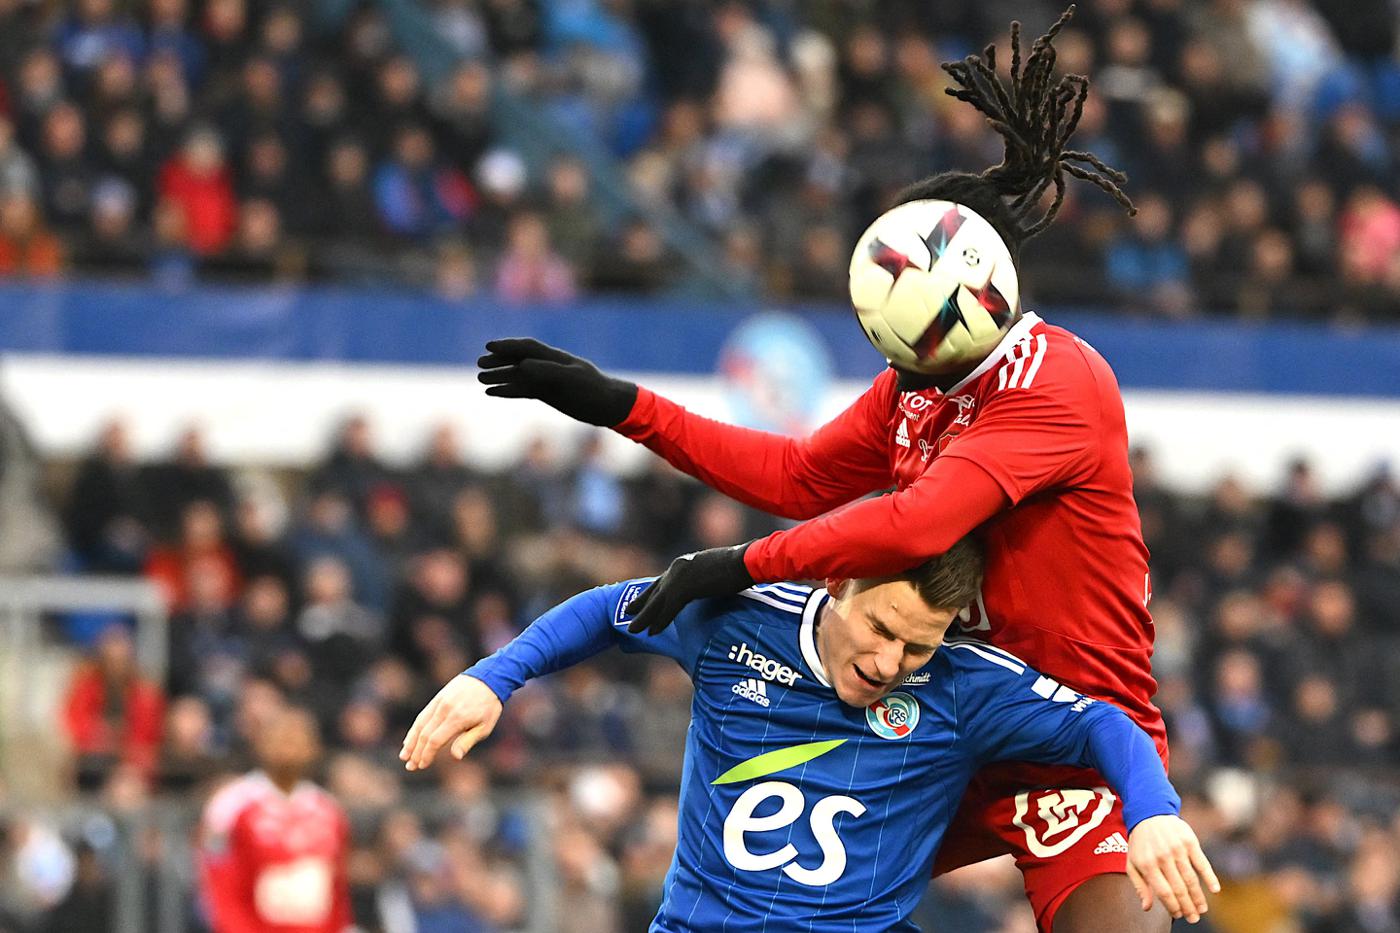 Strasbourg - Brest - 0-1. French Championship, 26th round. Match Review, Statistics